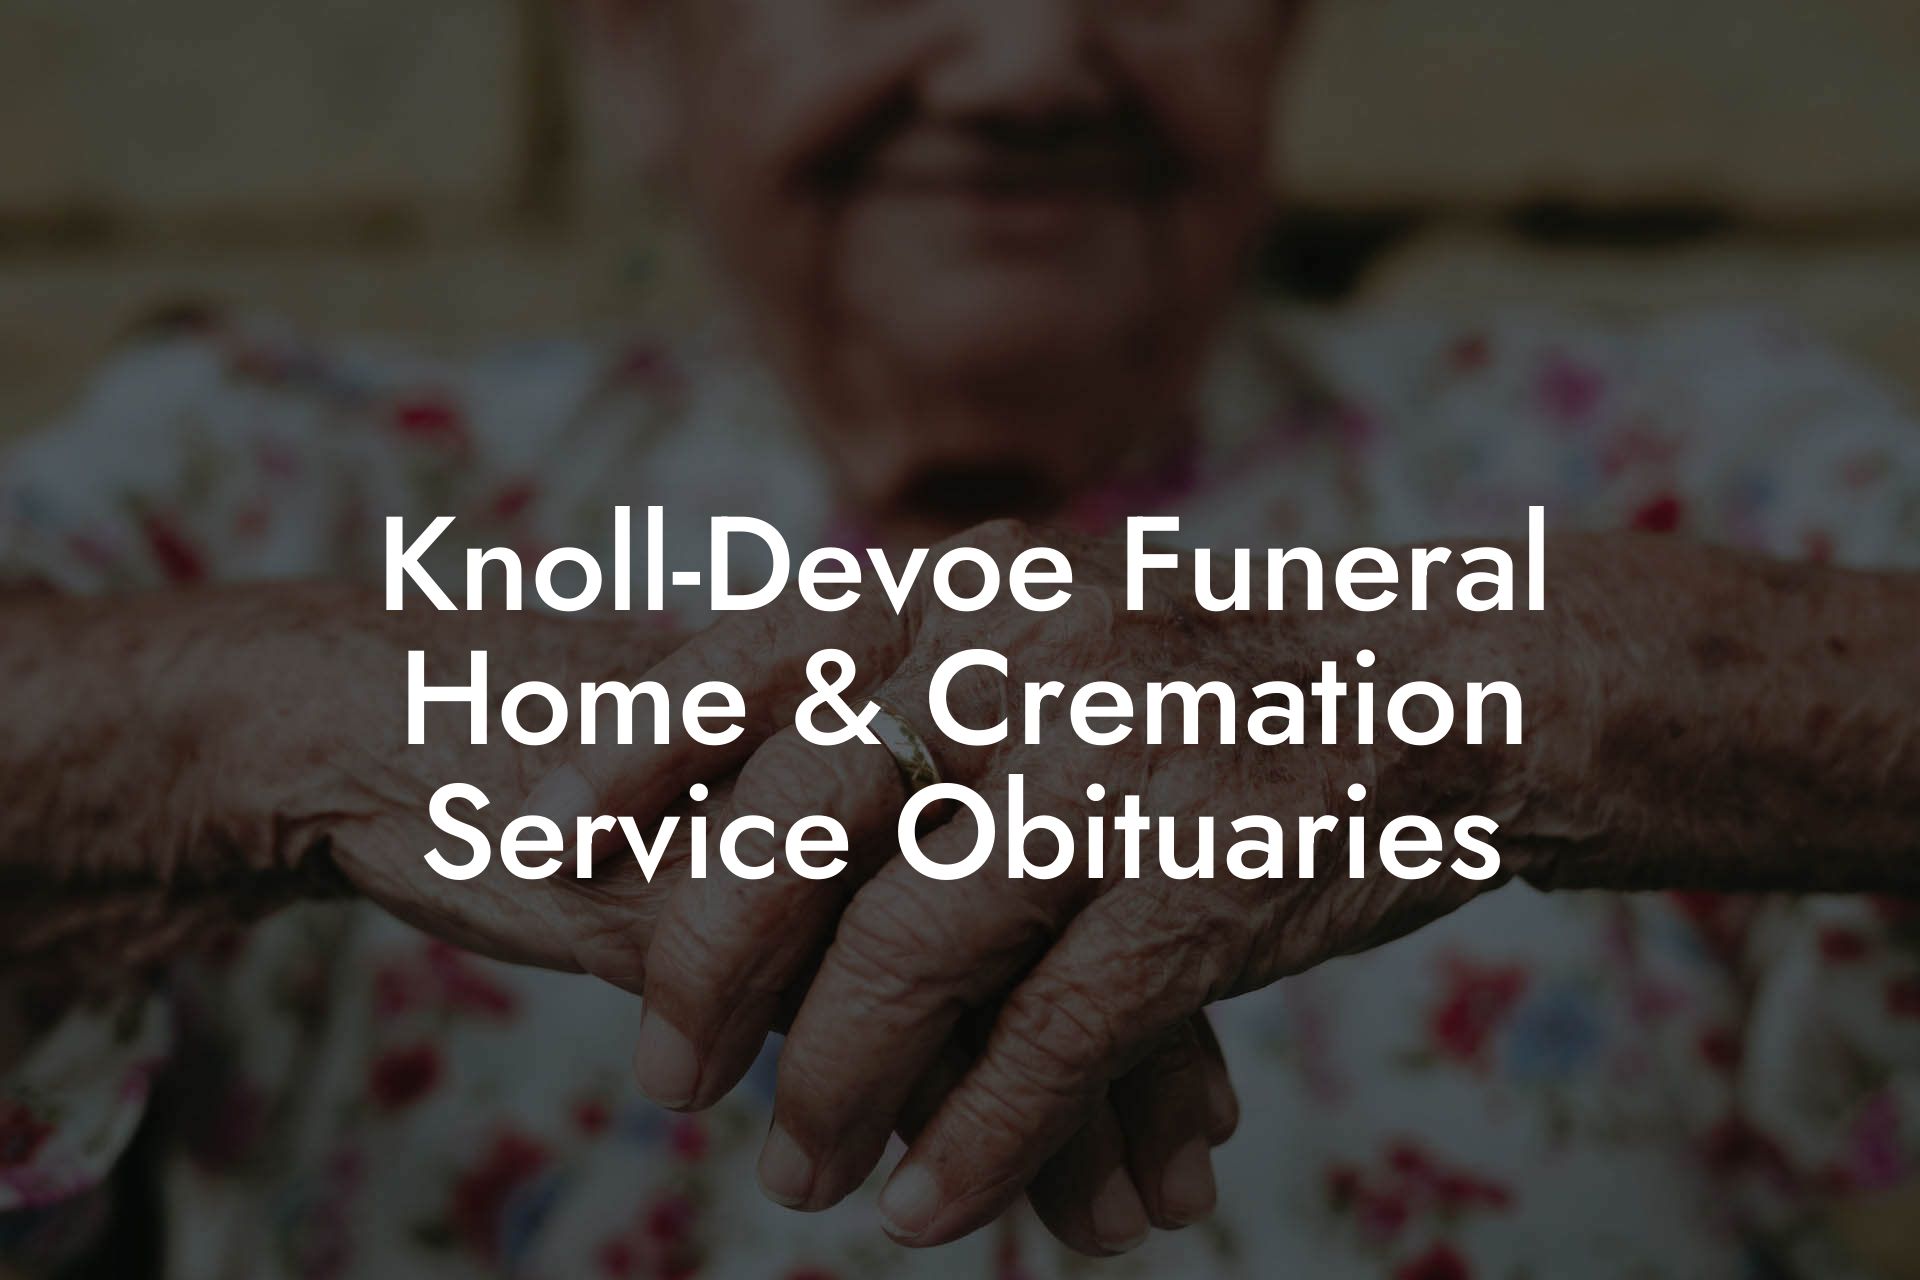 Knoll-Devoe Funeral Home & Cremation Service Obituaries